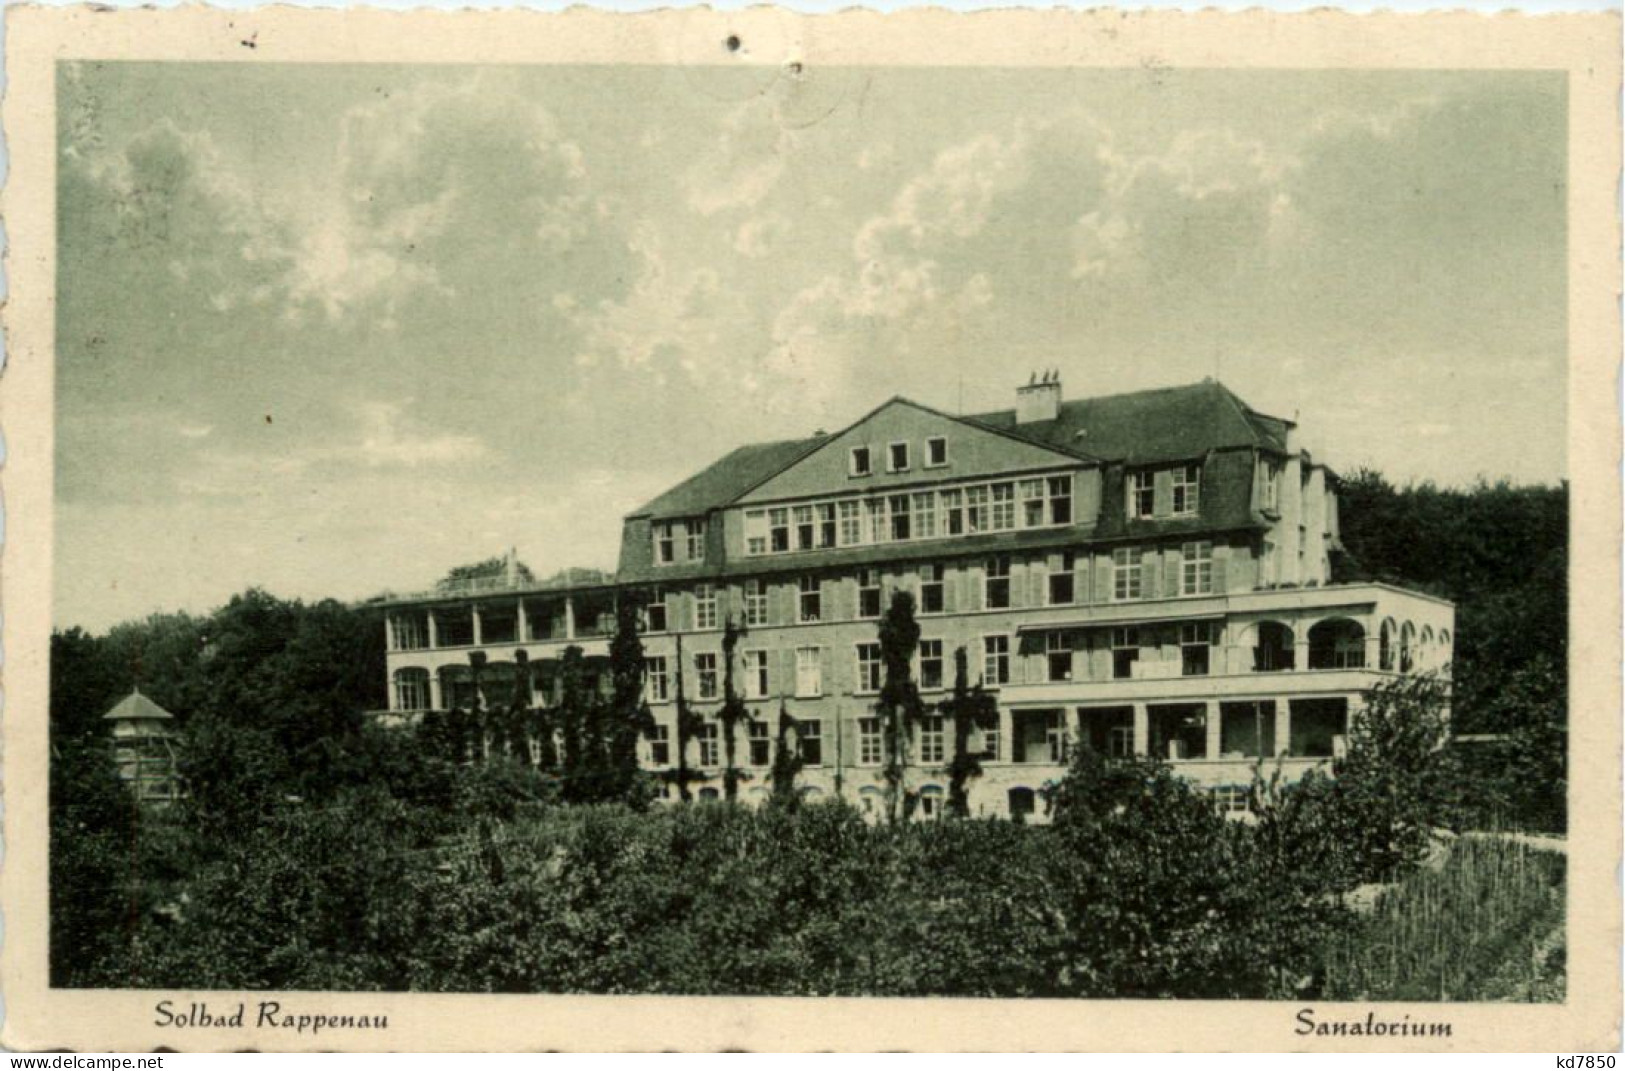 Solbad Rappenau, Sanatorium - Bad Rappenau